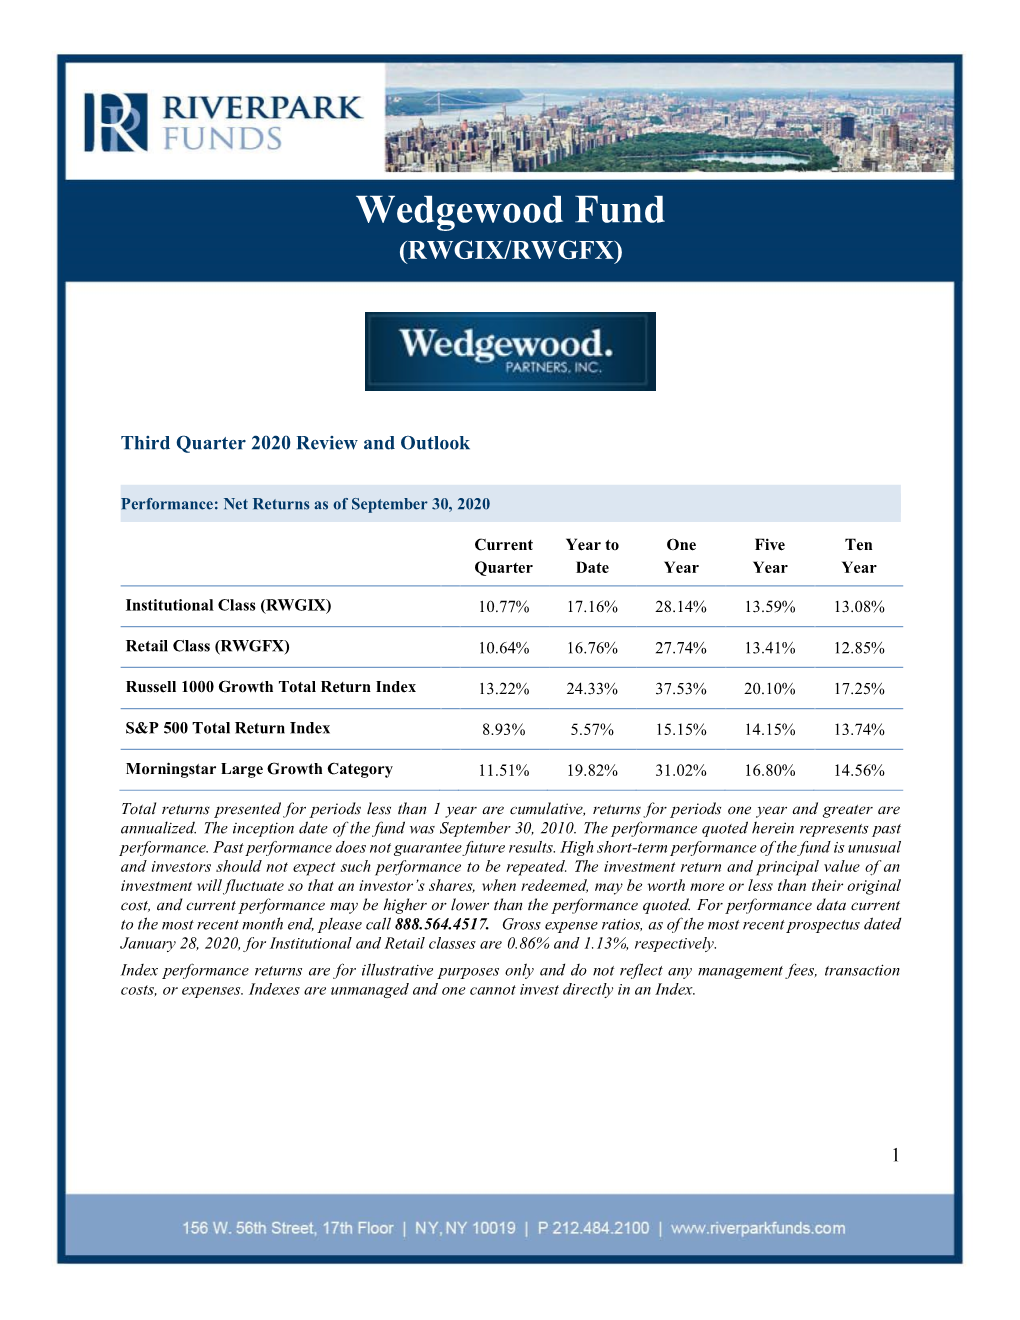 Wedgewood Fund (RWGIX/RWGFX)